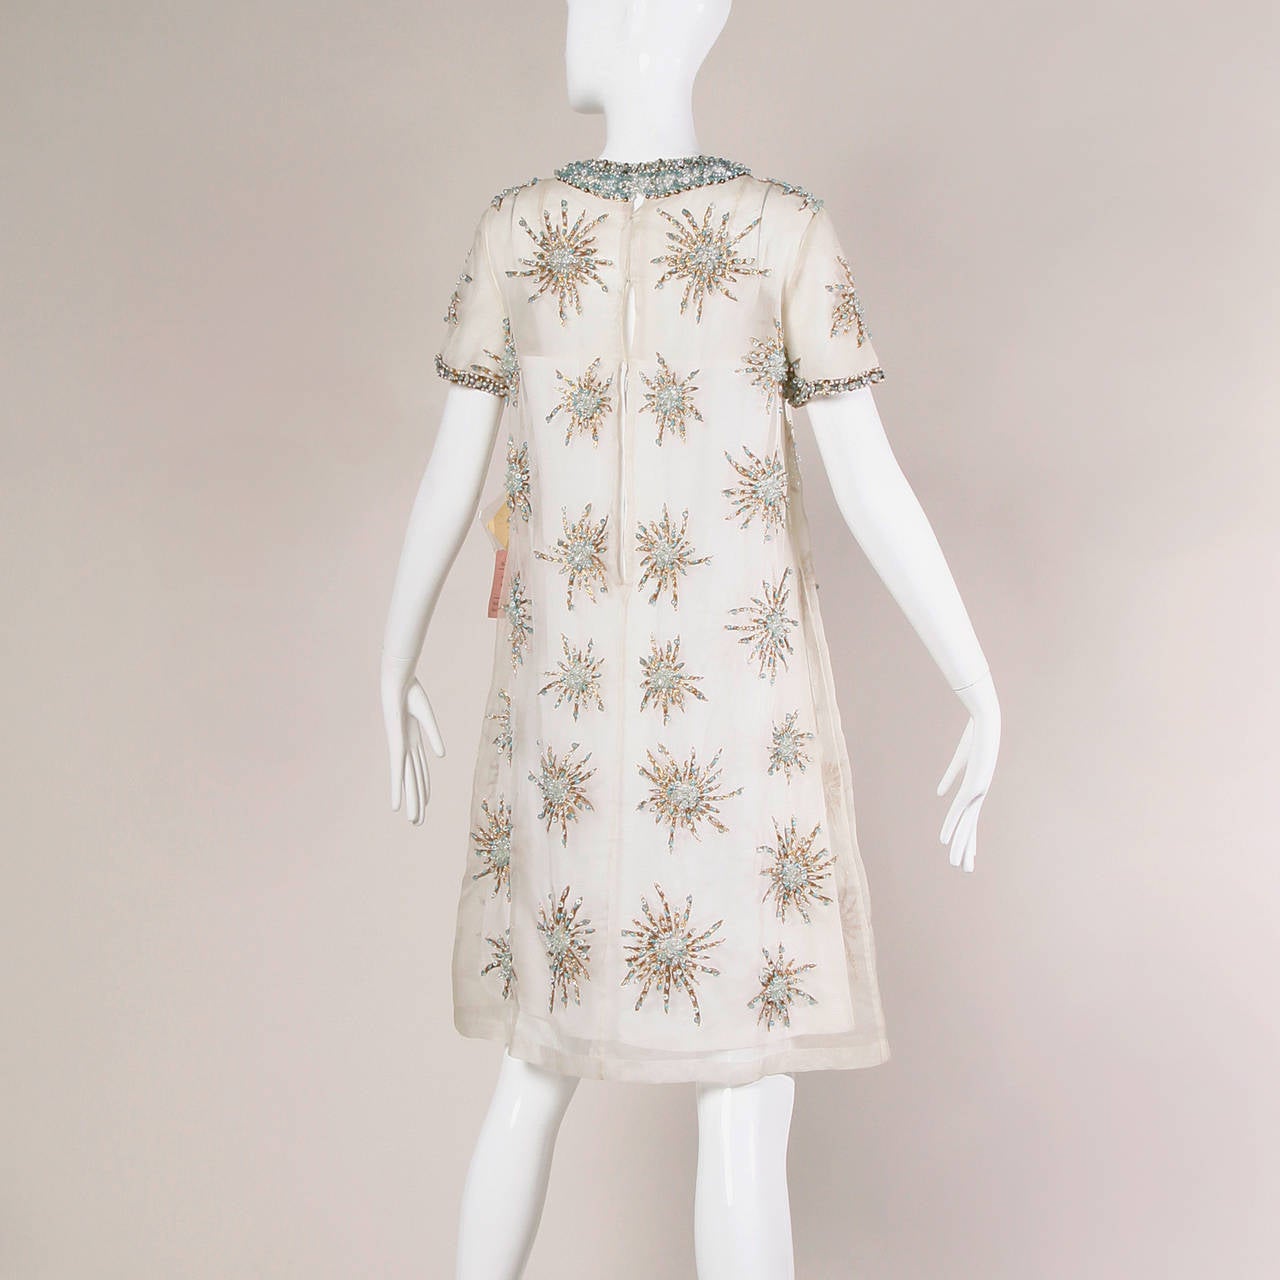 1960s Unworn Vintage Silk Embellished Shift Dress with Original Tags Attached 3